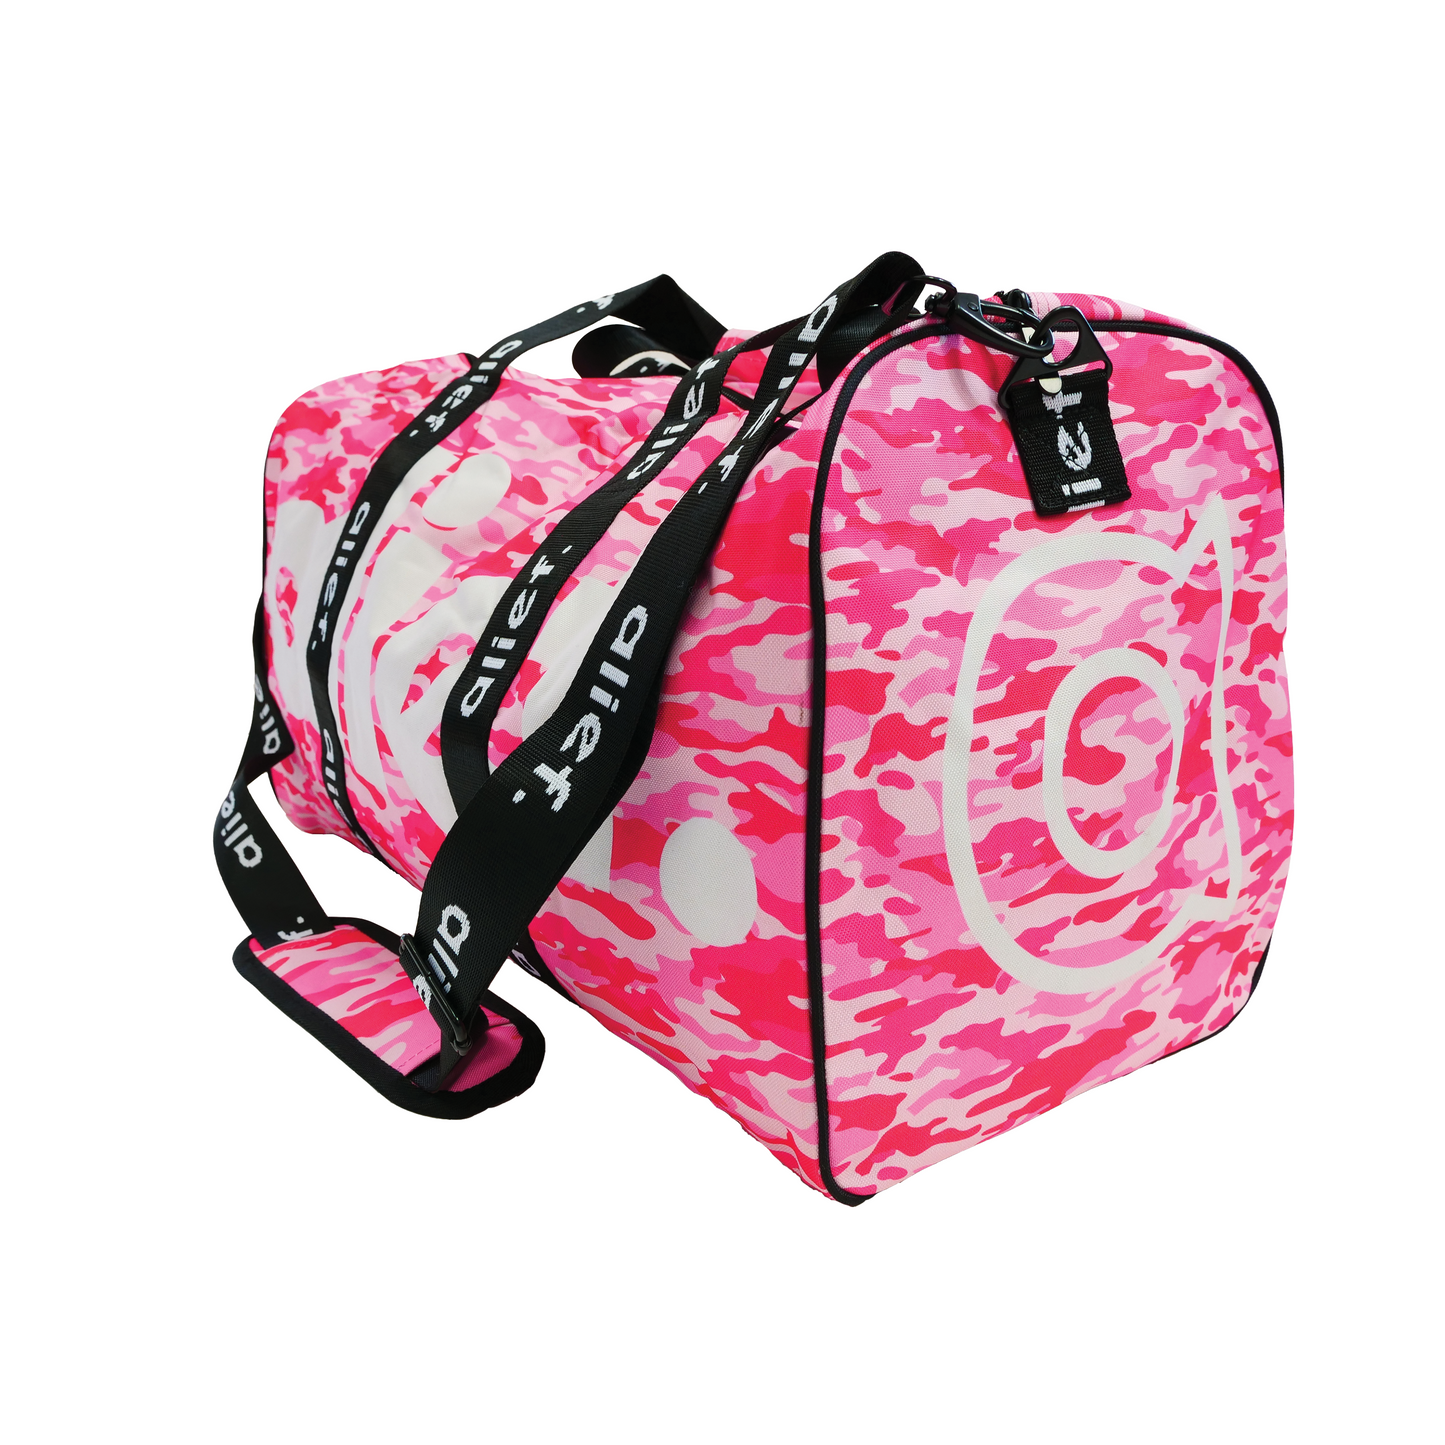 Alief Duffle Bag - Pink Camo